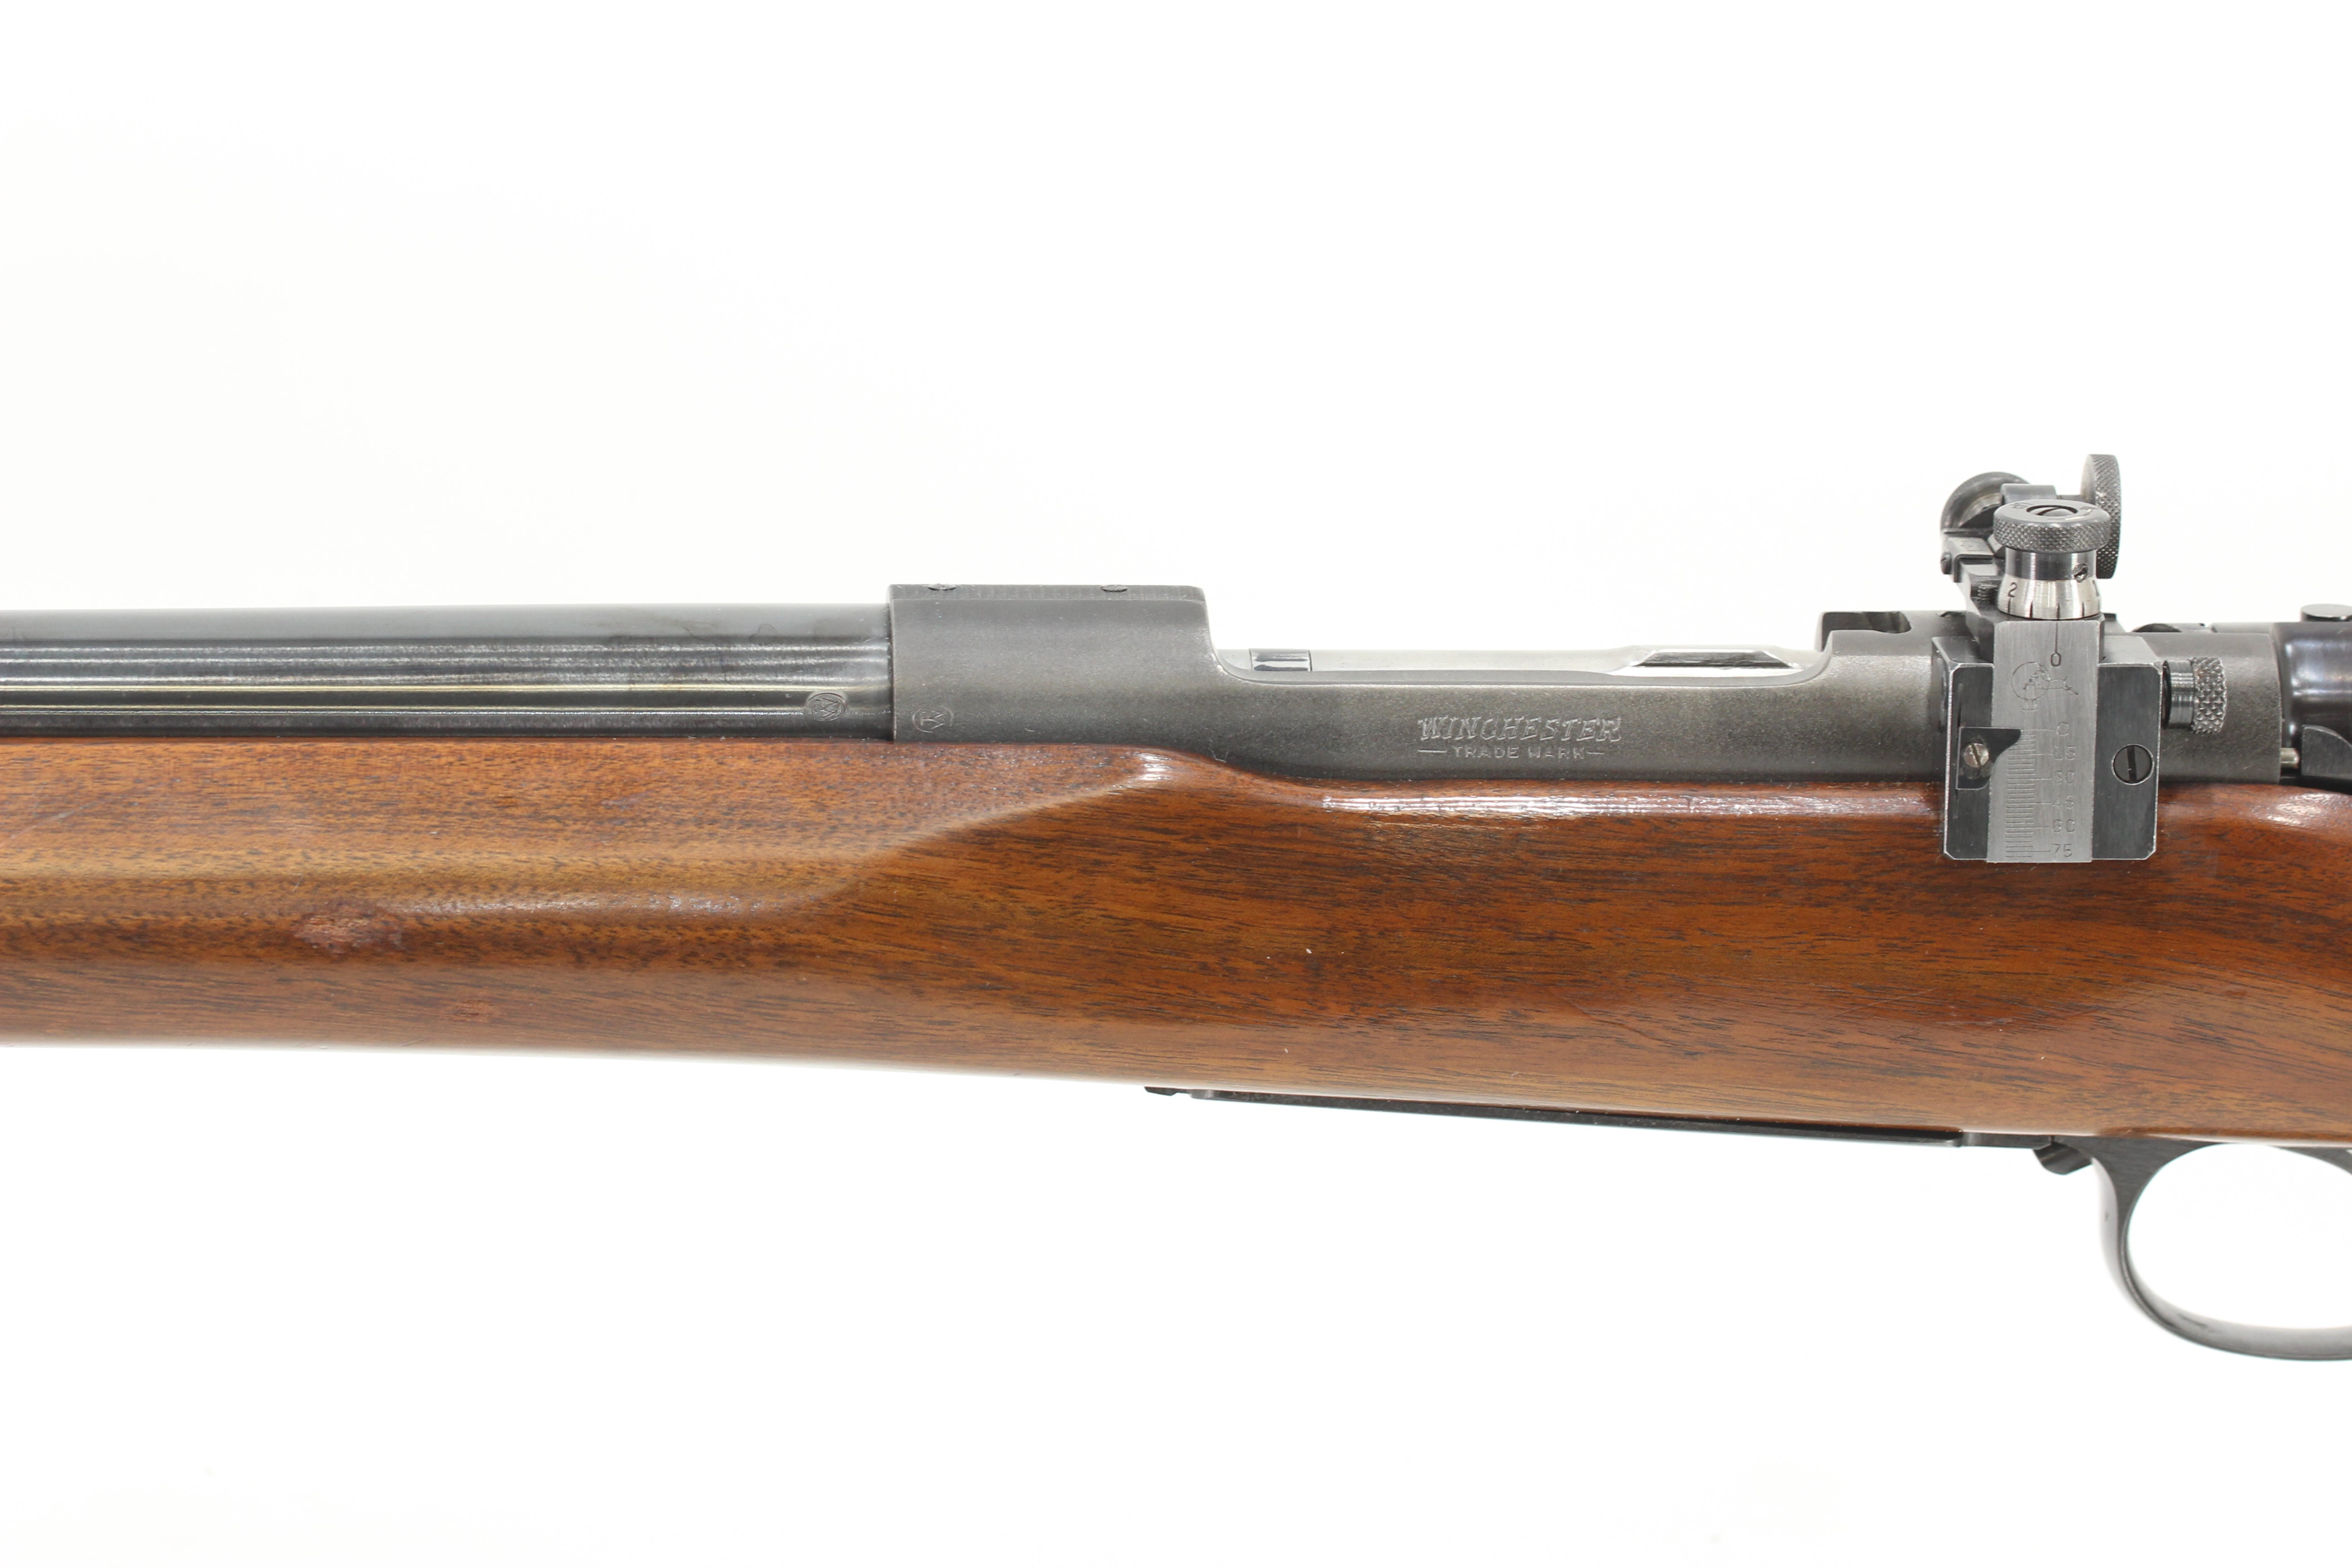 .30-06 Springfield Target Rifle - 1961